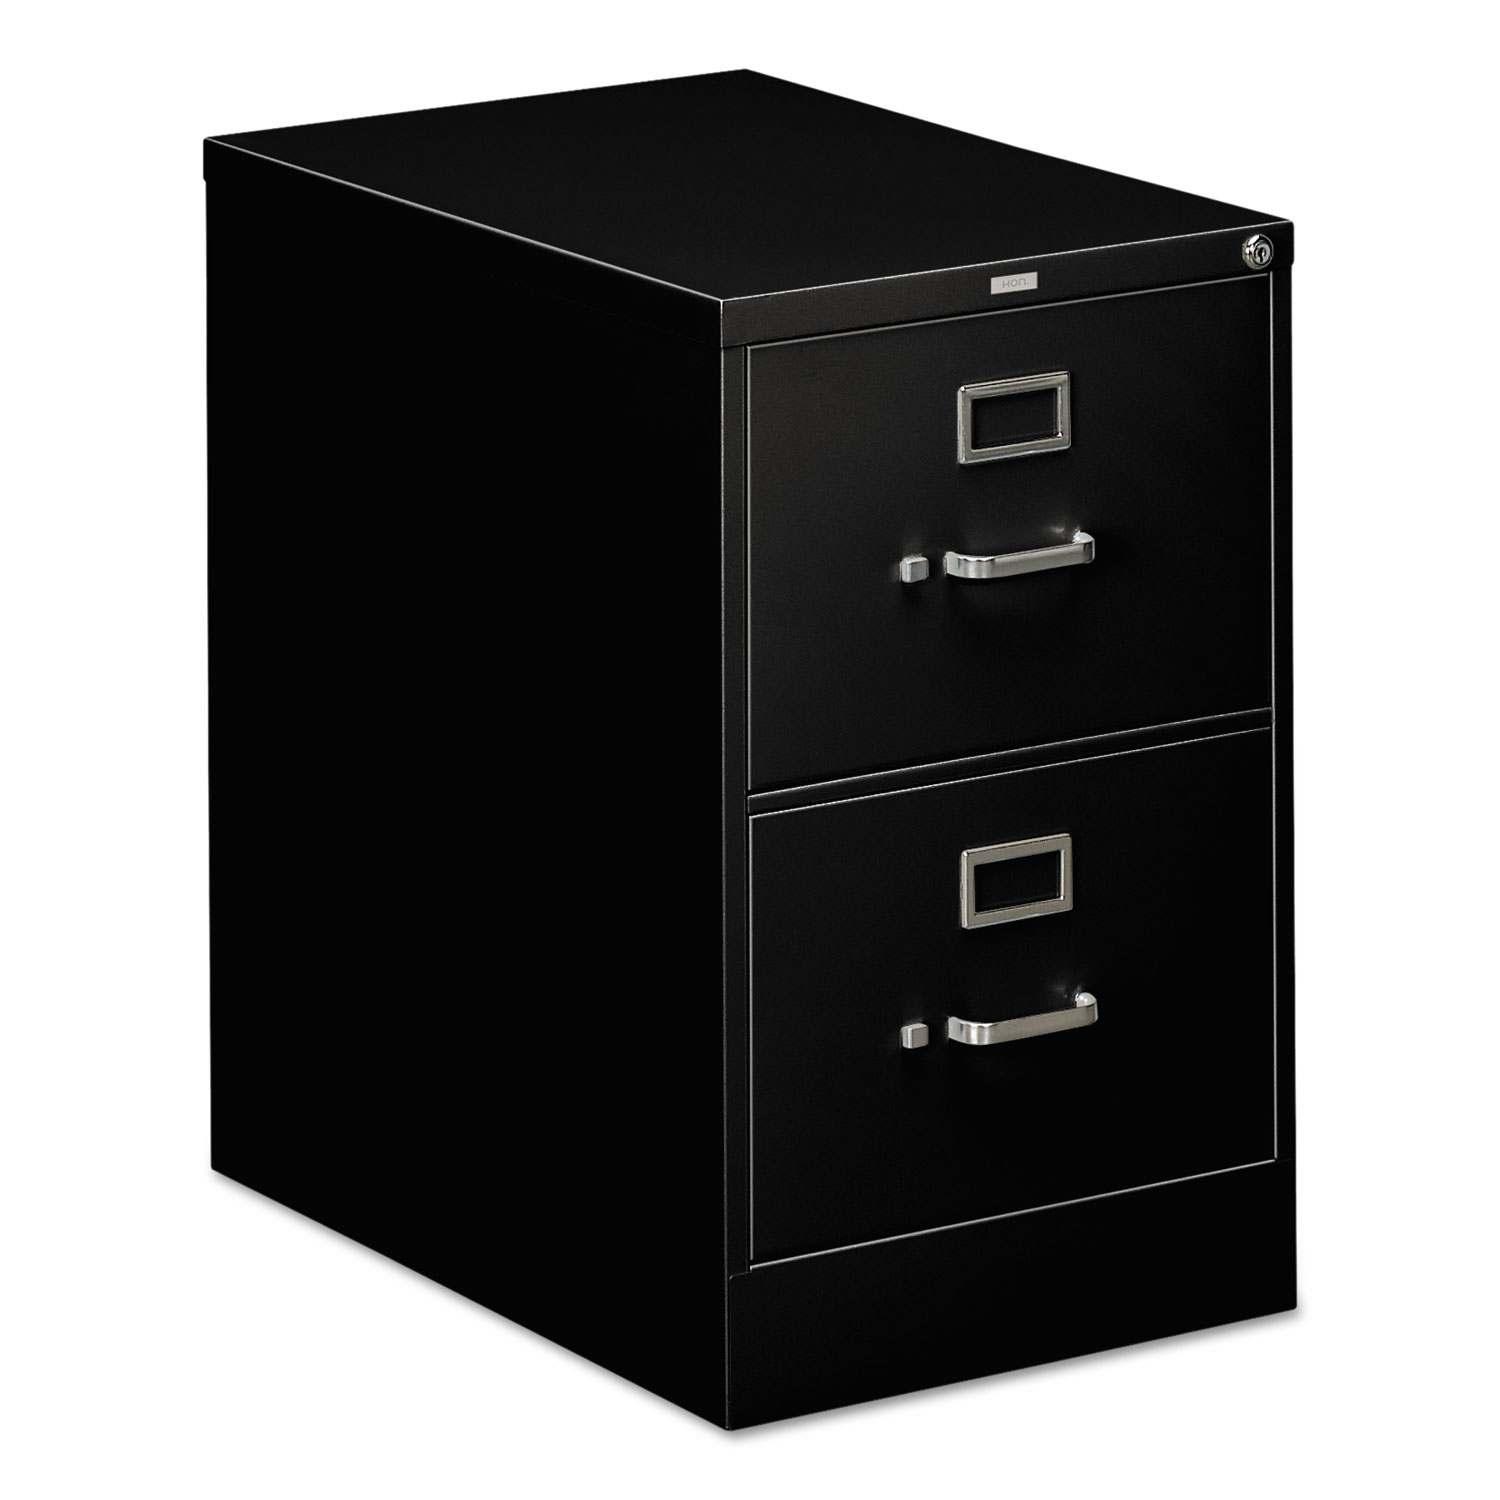 310 Series Two-Drawer, Full-Suspension File, Legal, 26-1/2d, Black